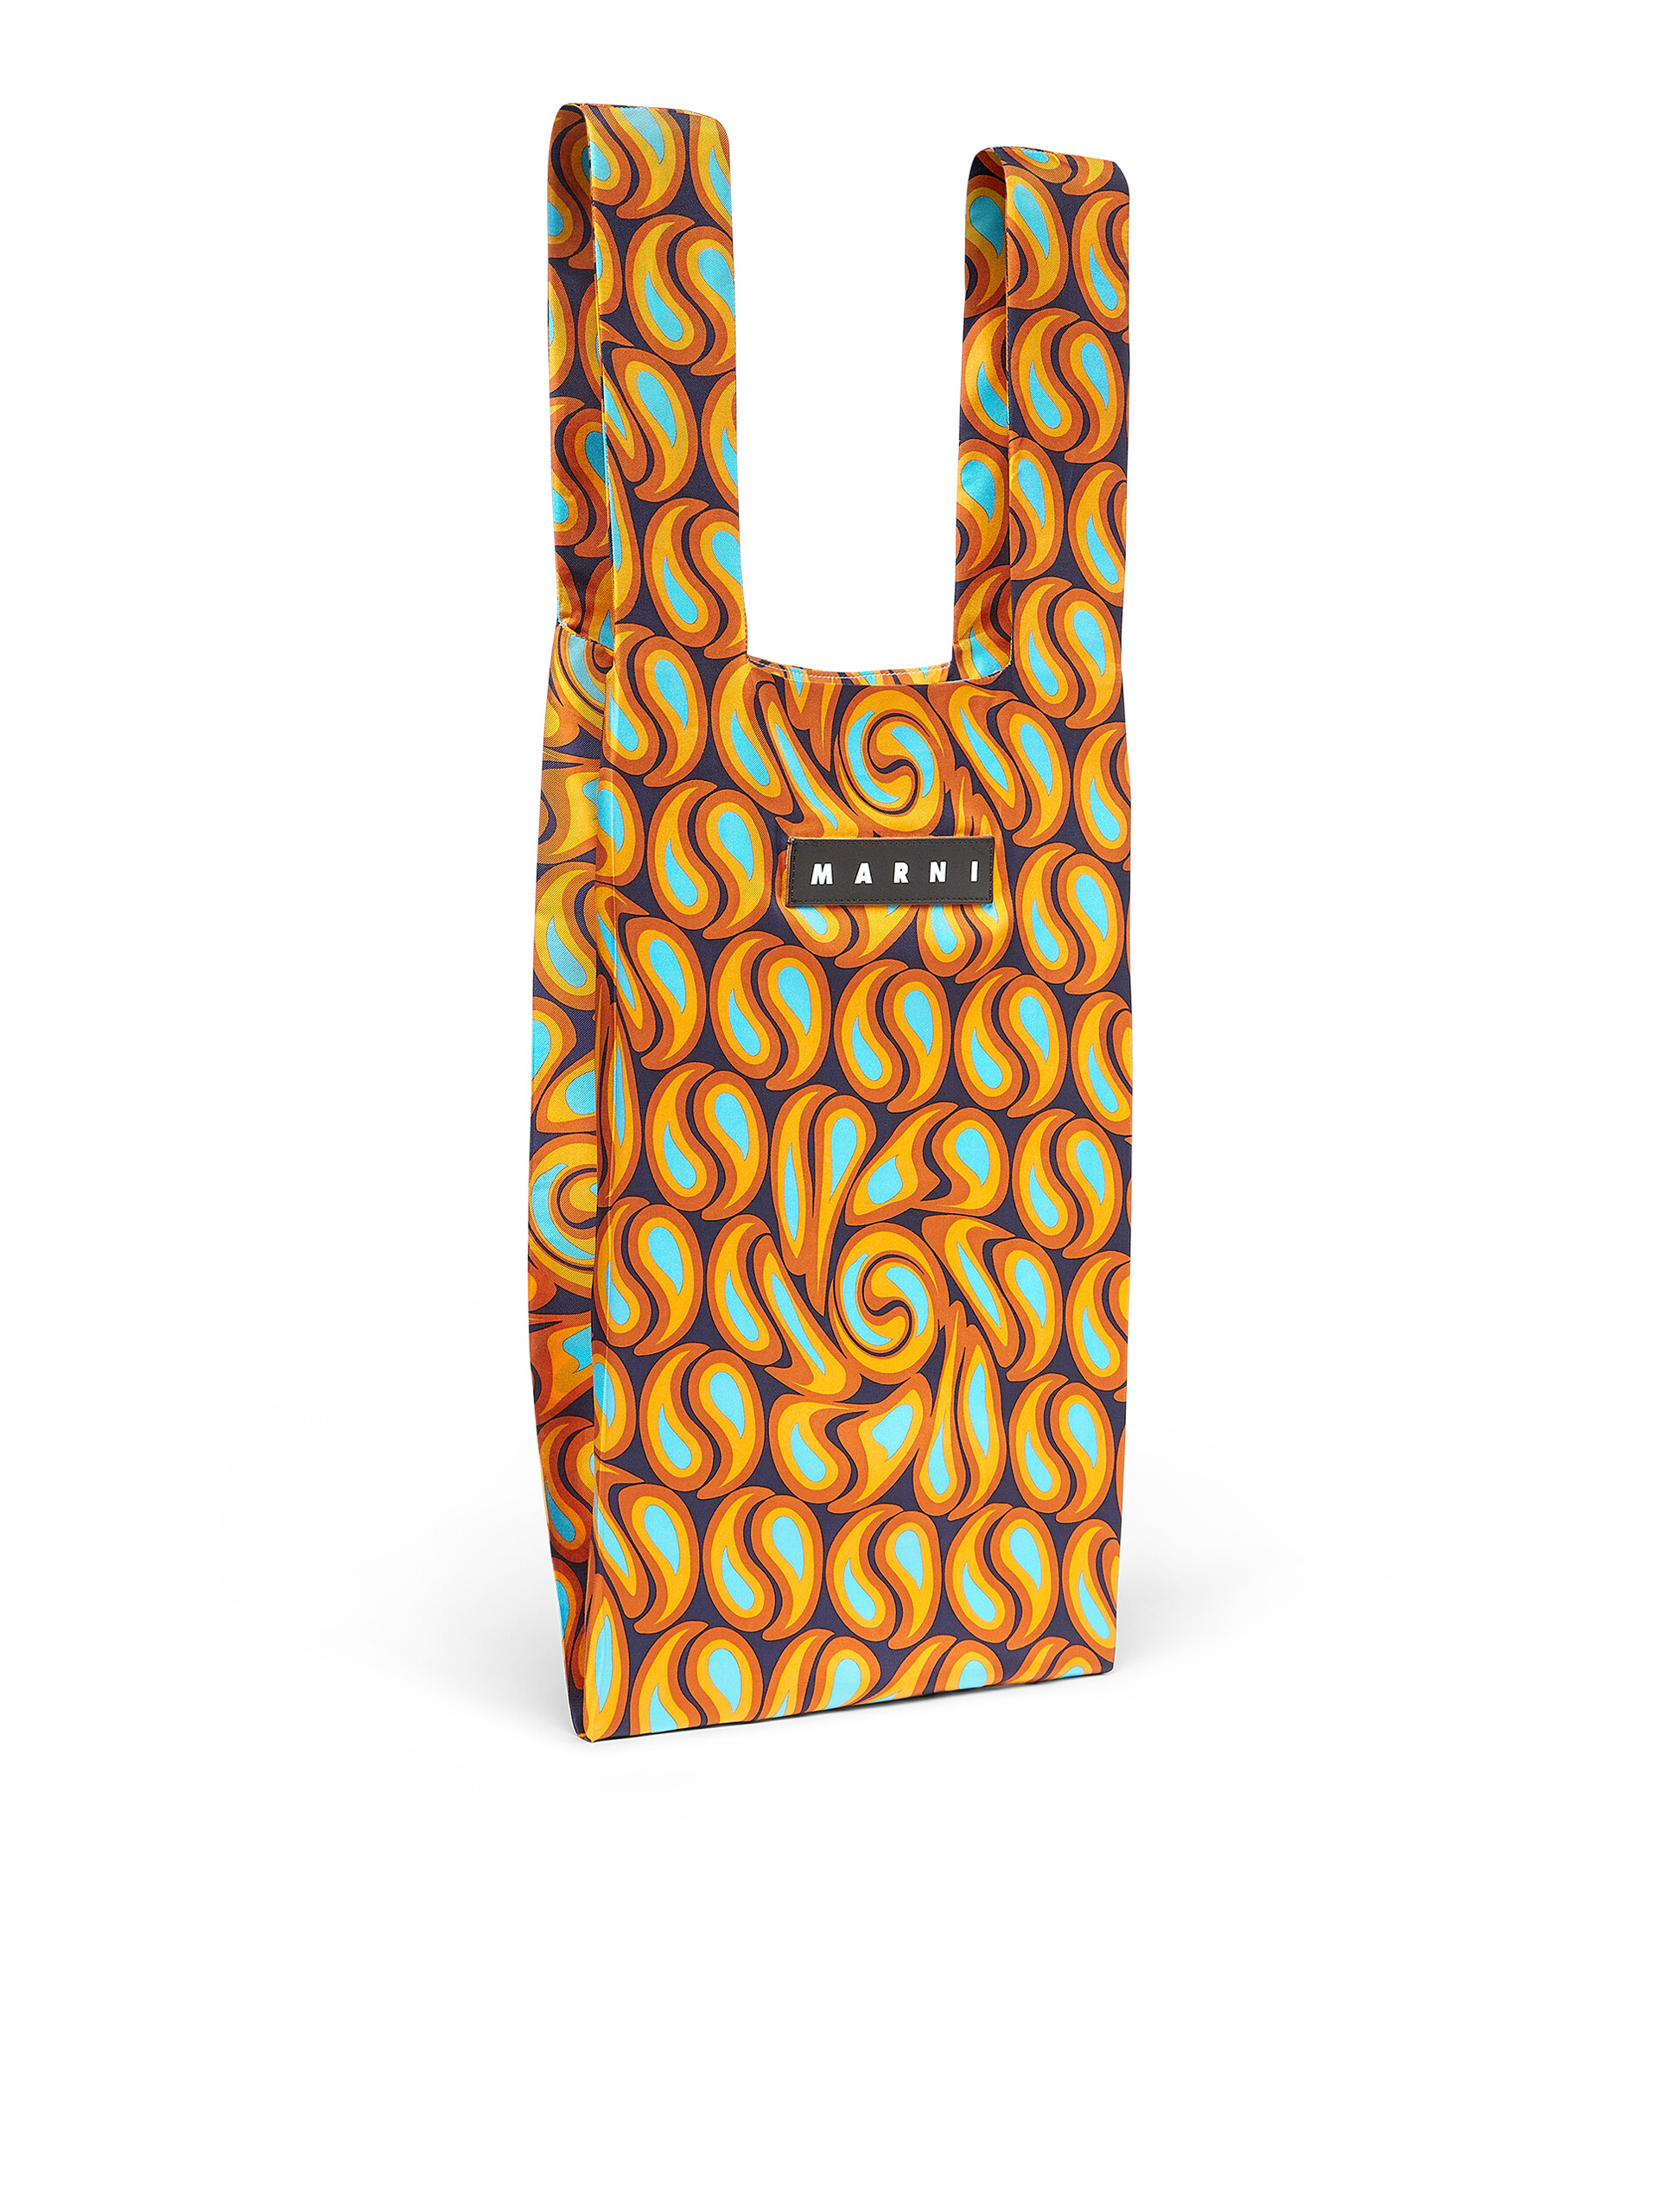 MARNI MARKET silk shopping bag with abstract print - Bags - Image 2